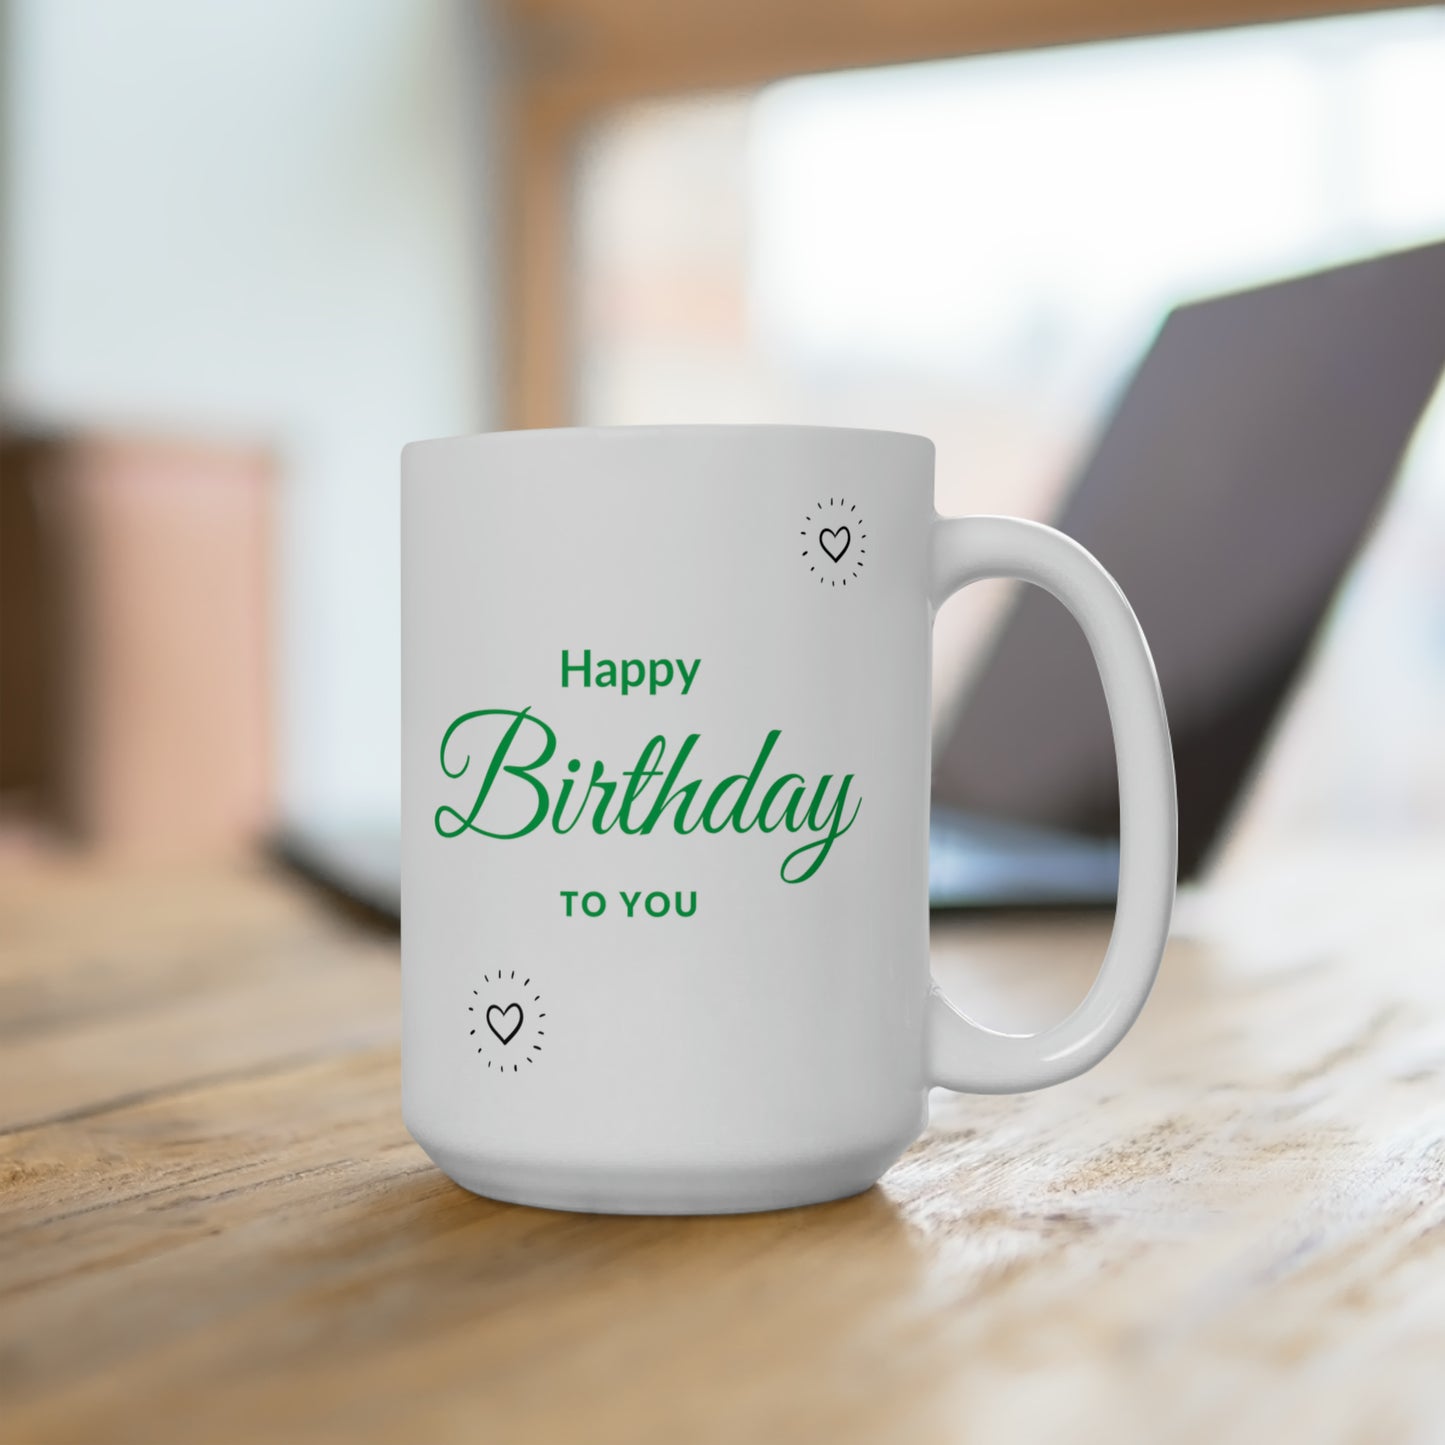 Happy Birthday to You Printed Mug, 15oz, White & Green